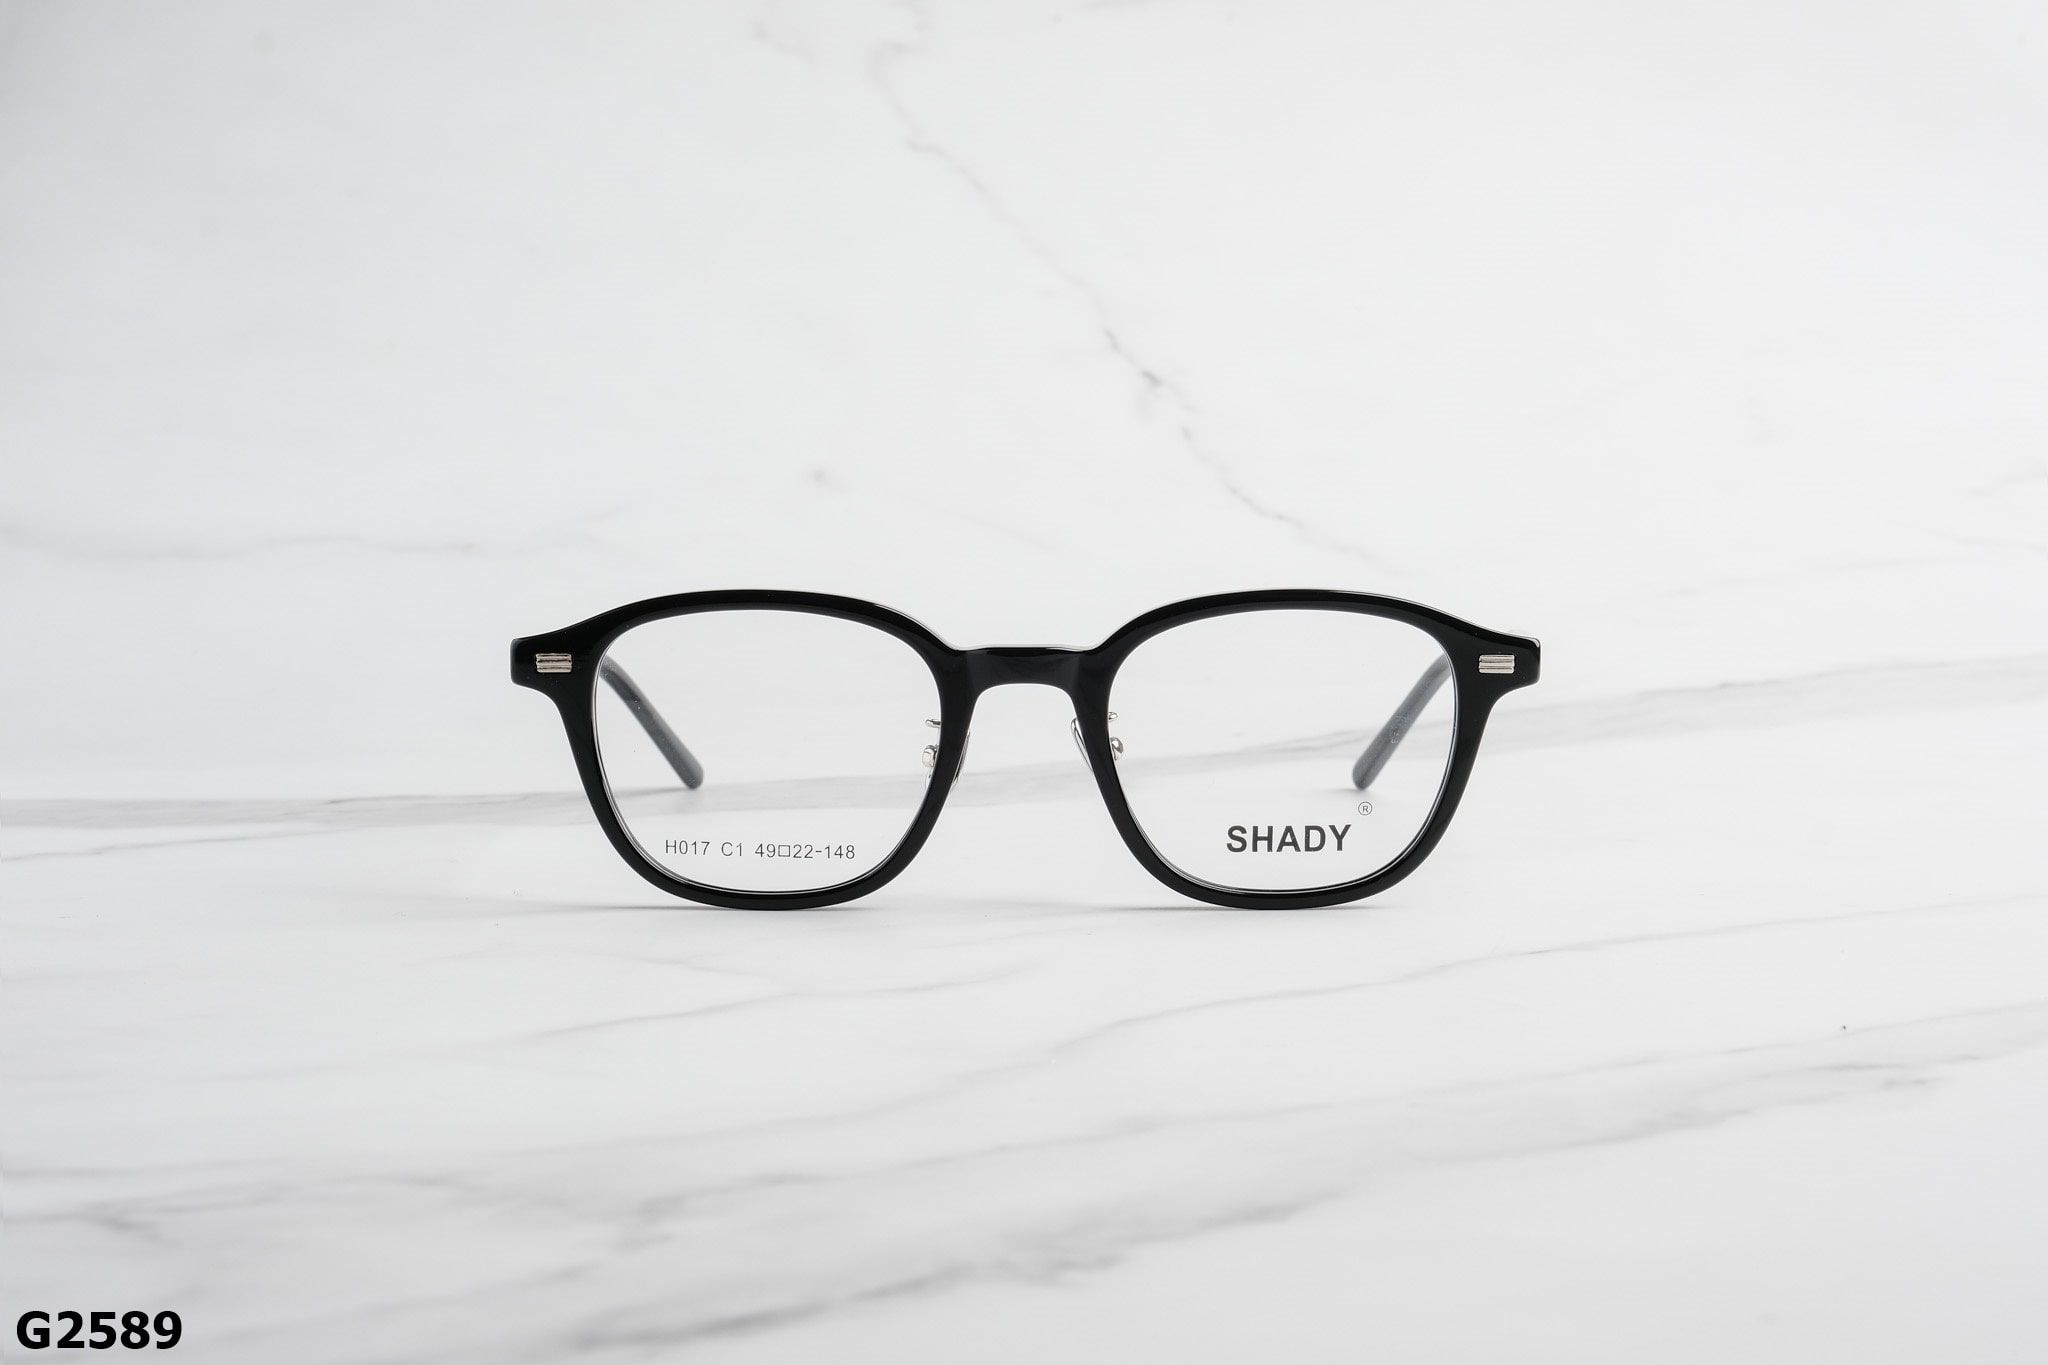  SHADY Eyewear - Glasses - G2589 